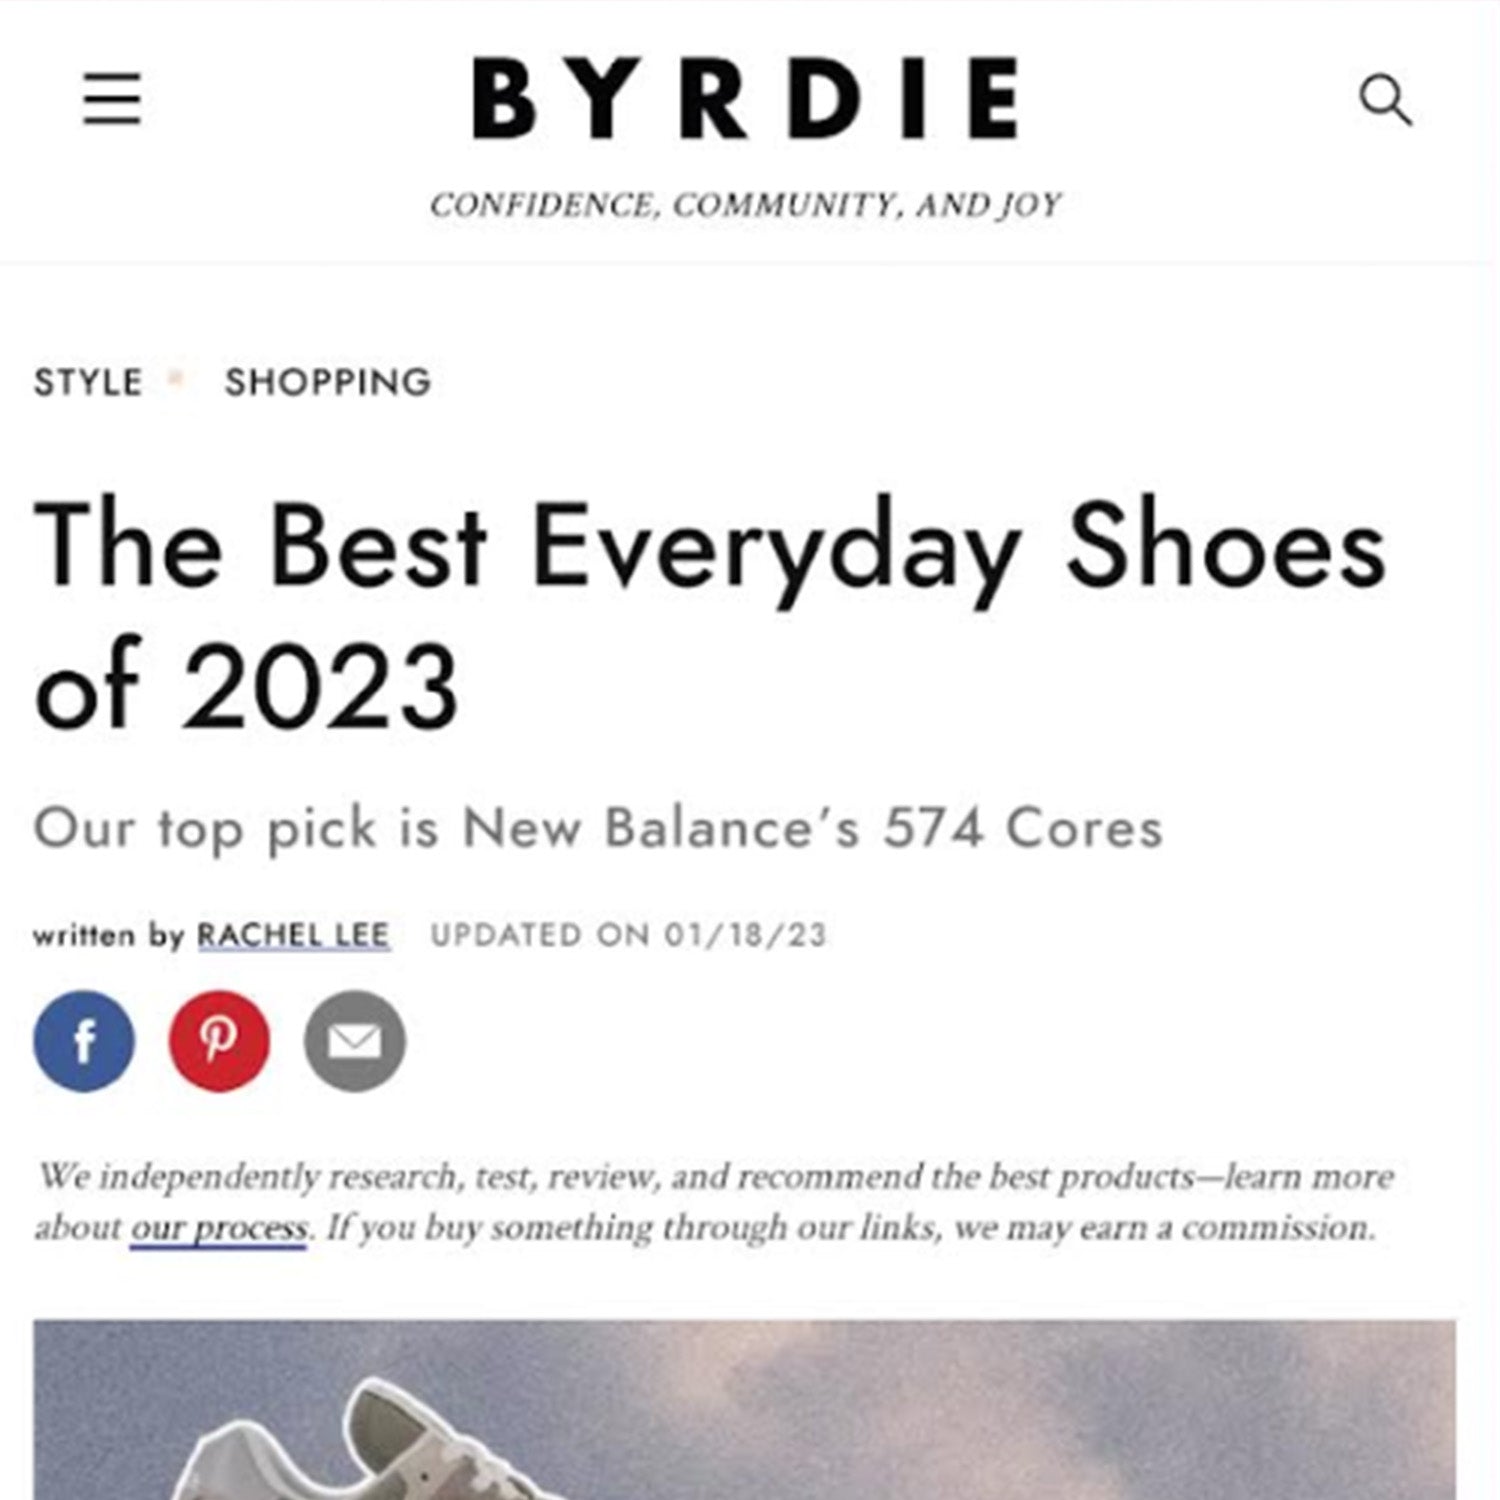 Byrdie The Best Everyday Shoes of 2023